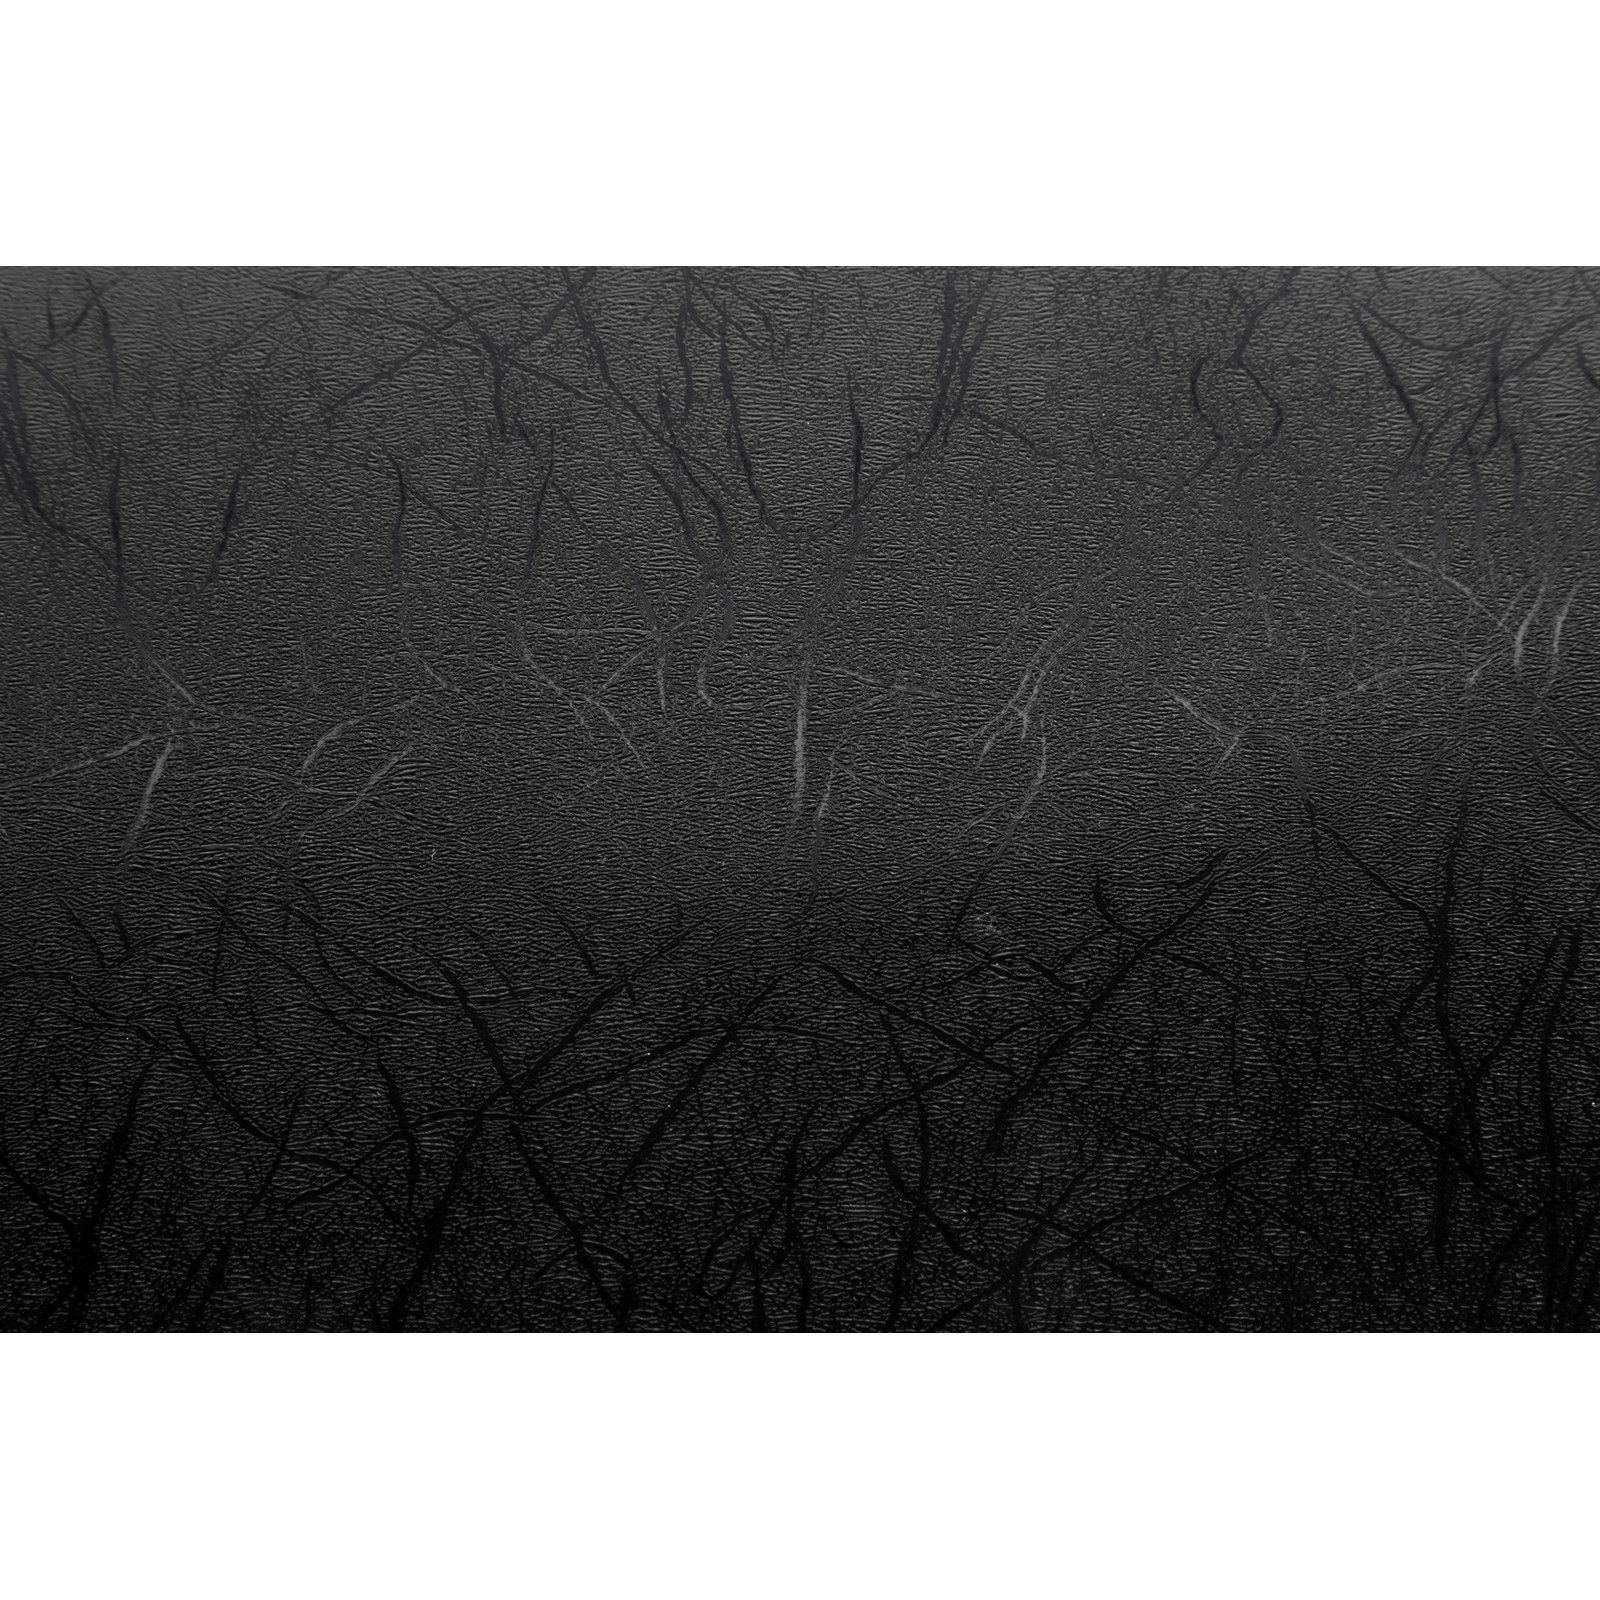 Cricut • Vinyl Permanent 60x30cm Sampler Textured Metallic Dark Metals